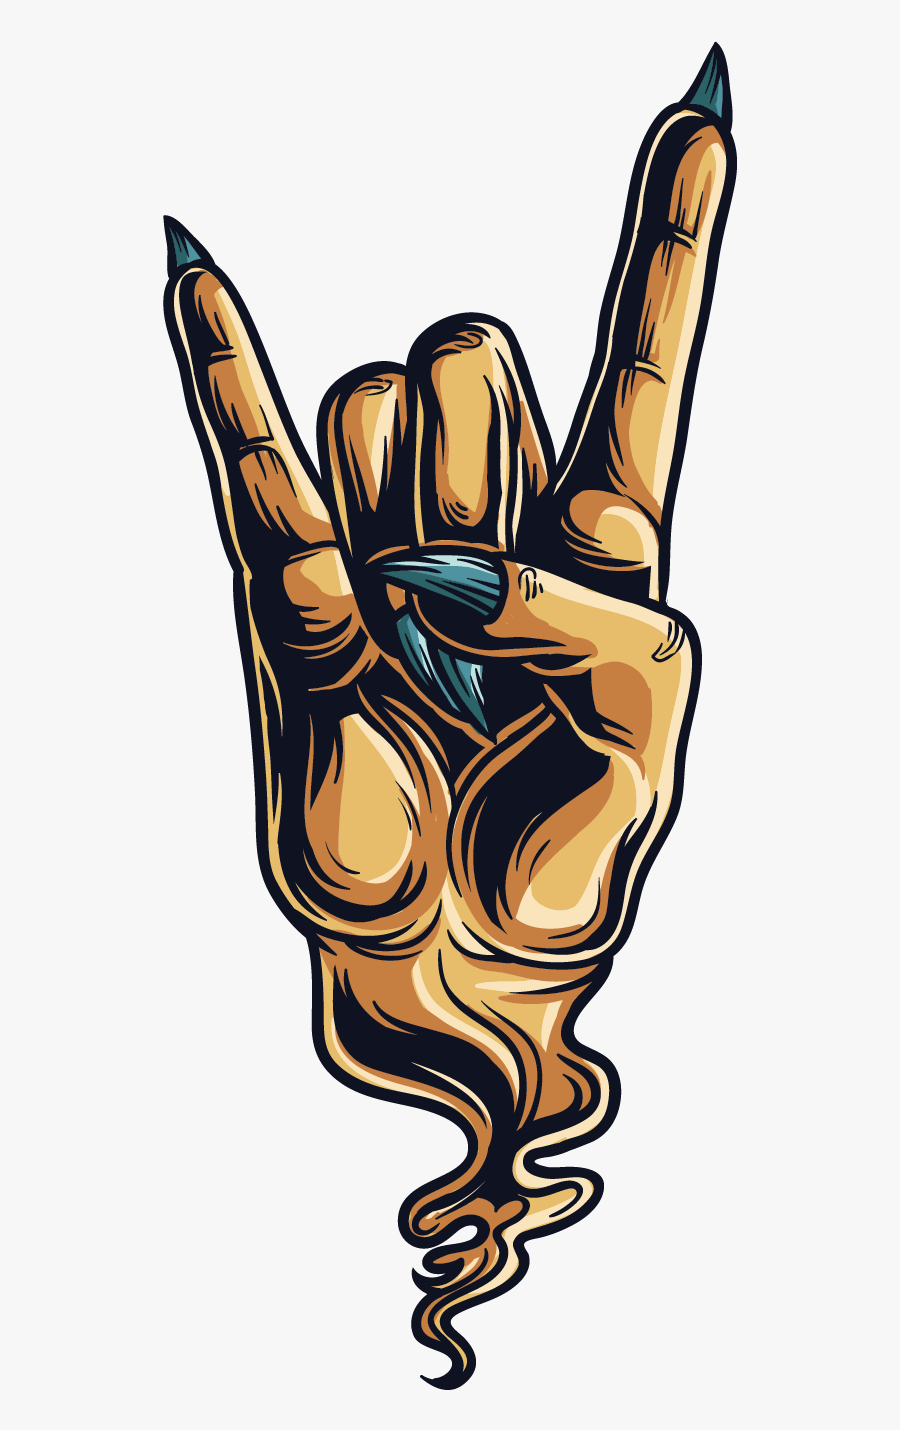 Sign Of The Horns Devil Hand Gesture Sticker - Devil Horns Hand Png, Transparent Clipart